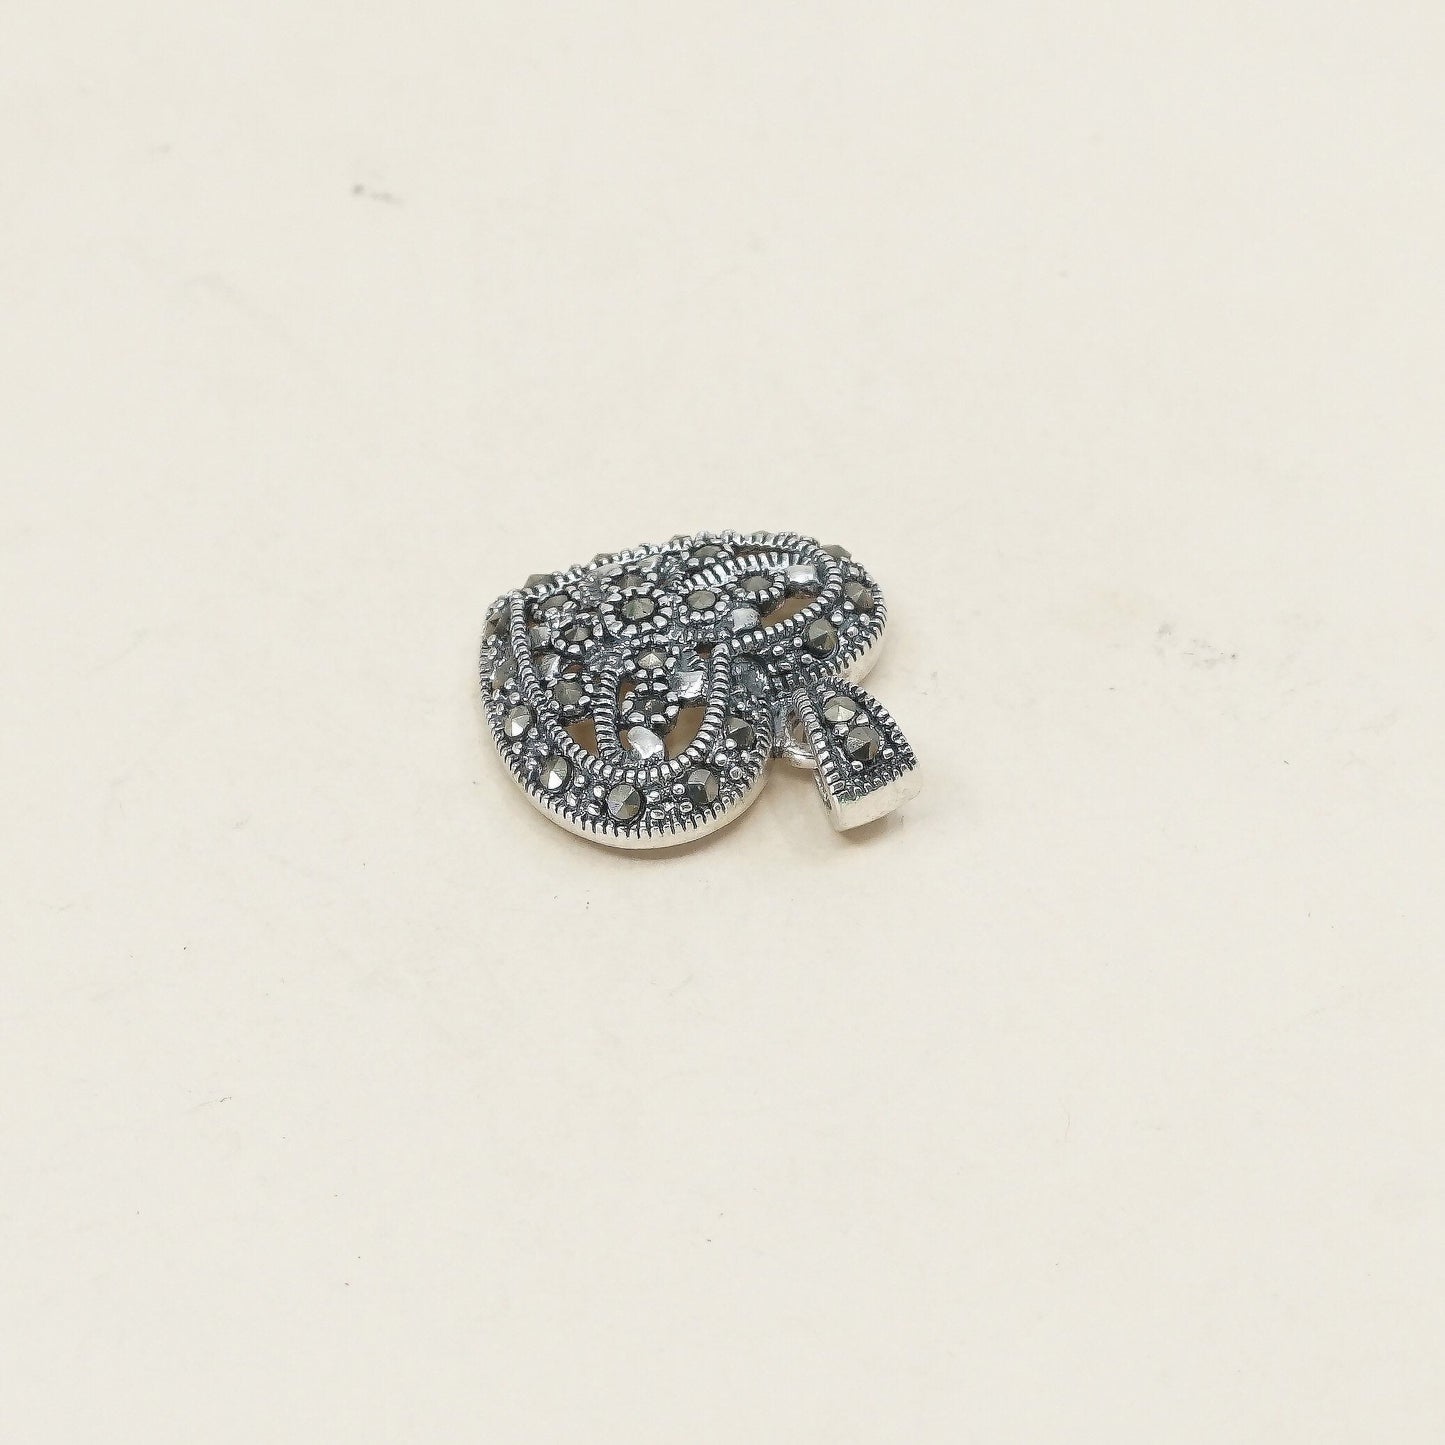 VTG sterling silver handmade pendant, Mexico 925 w/ marcasite heart